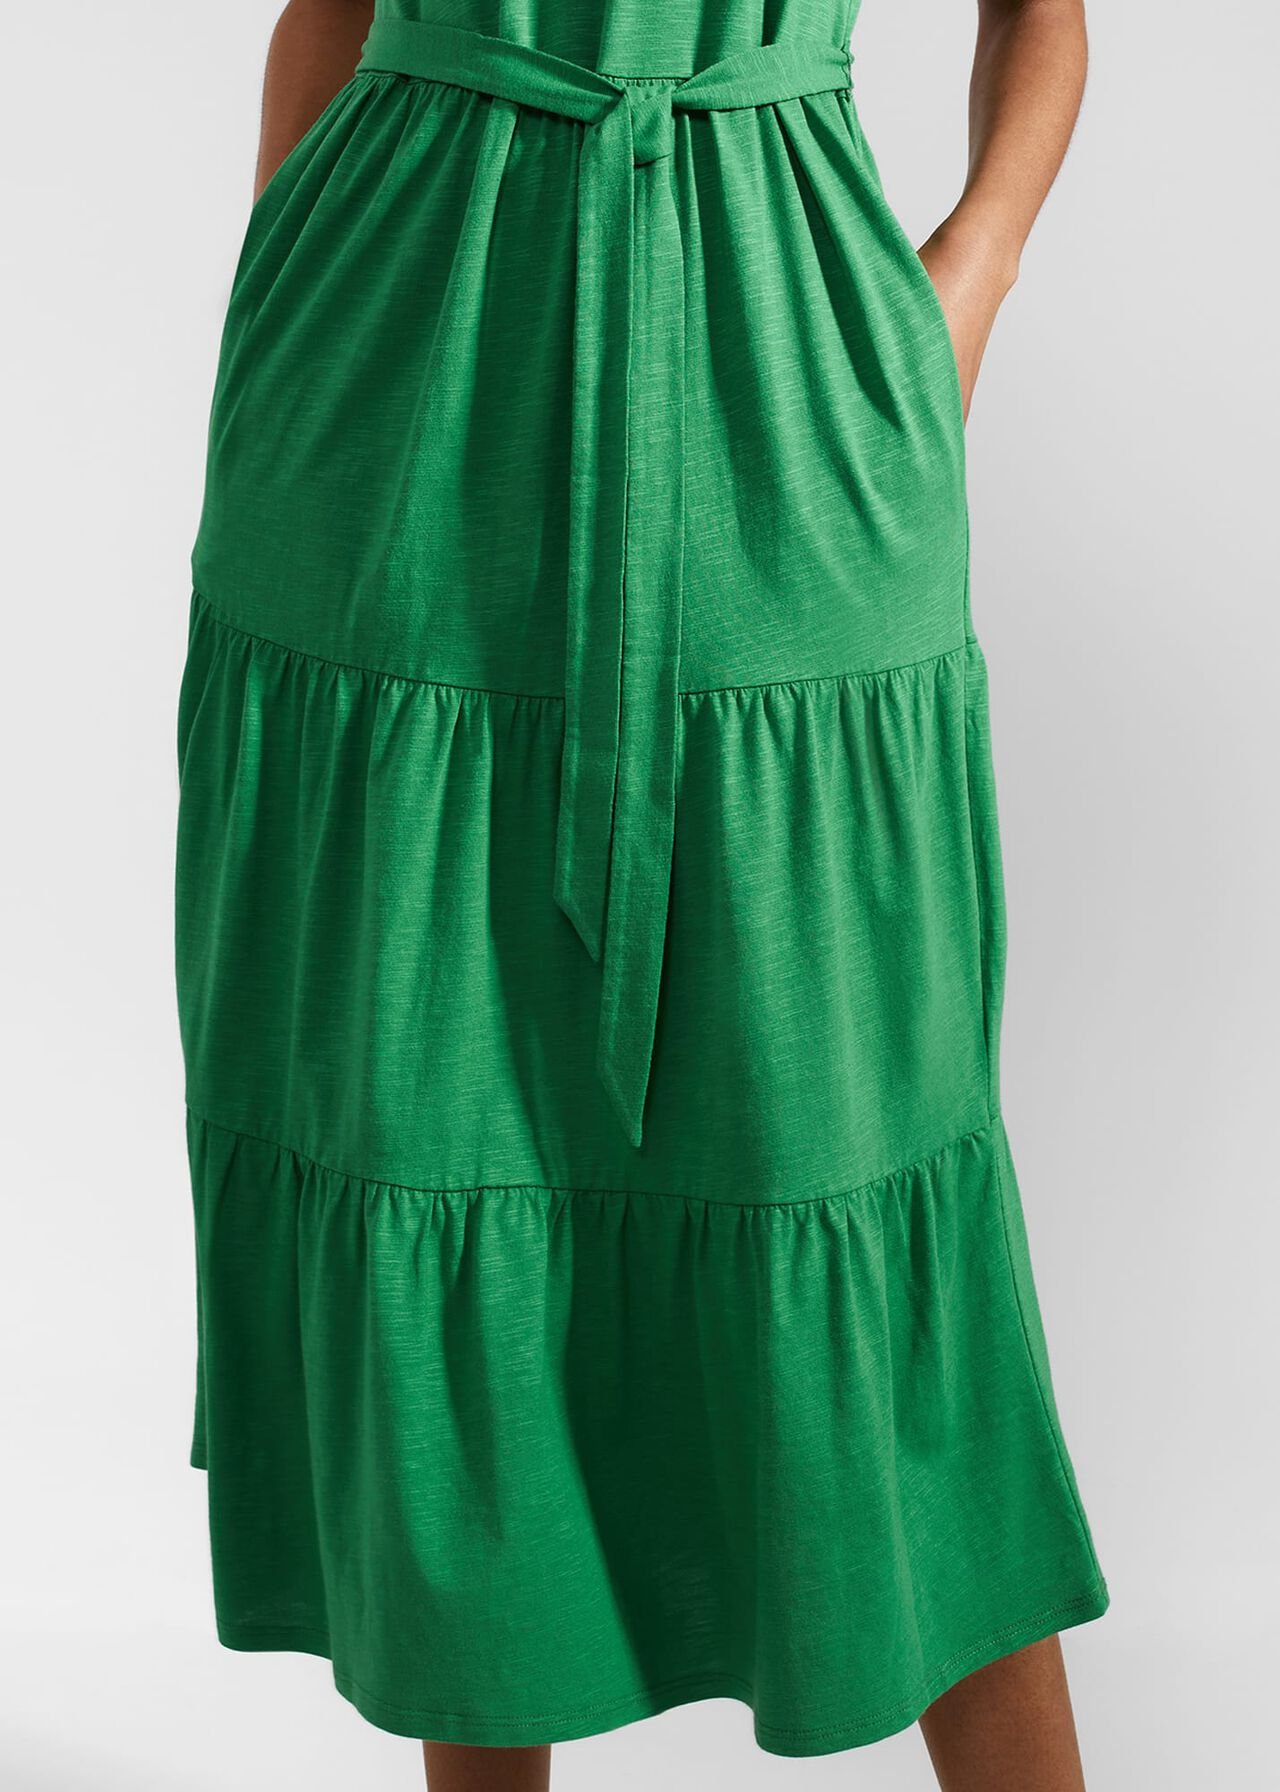 Brodie Jersey Dress, Green, hi-res